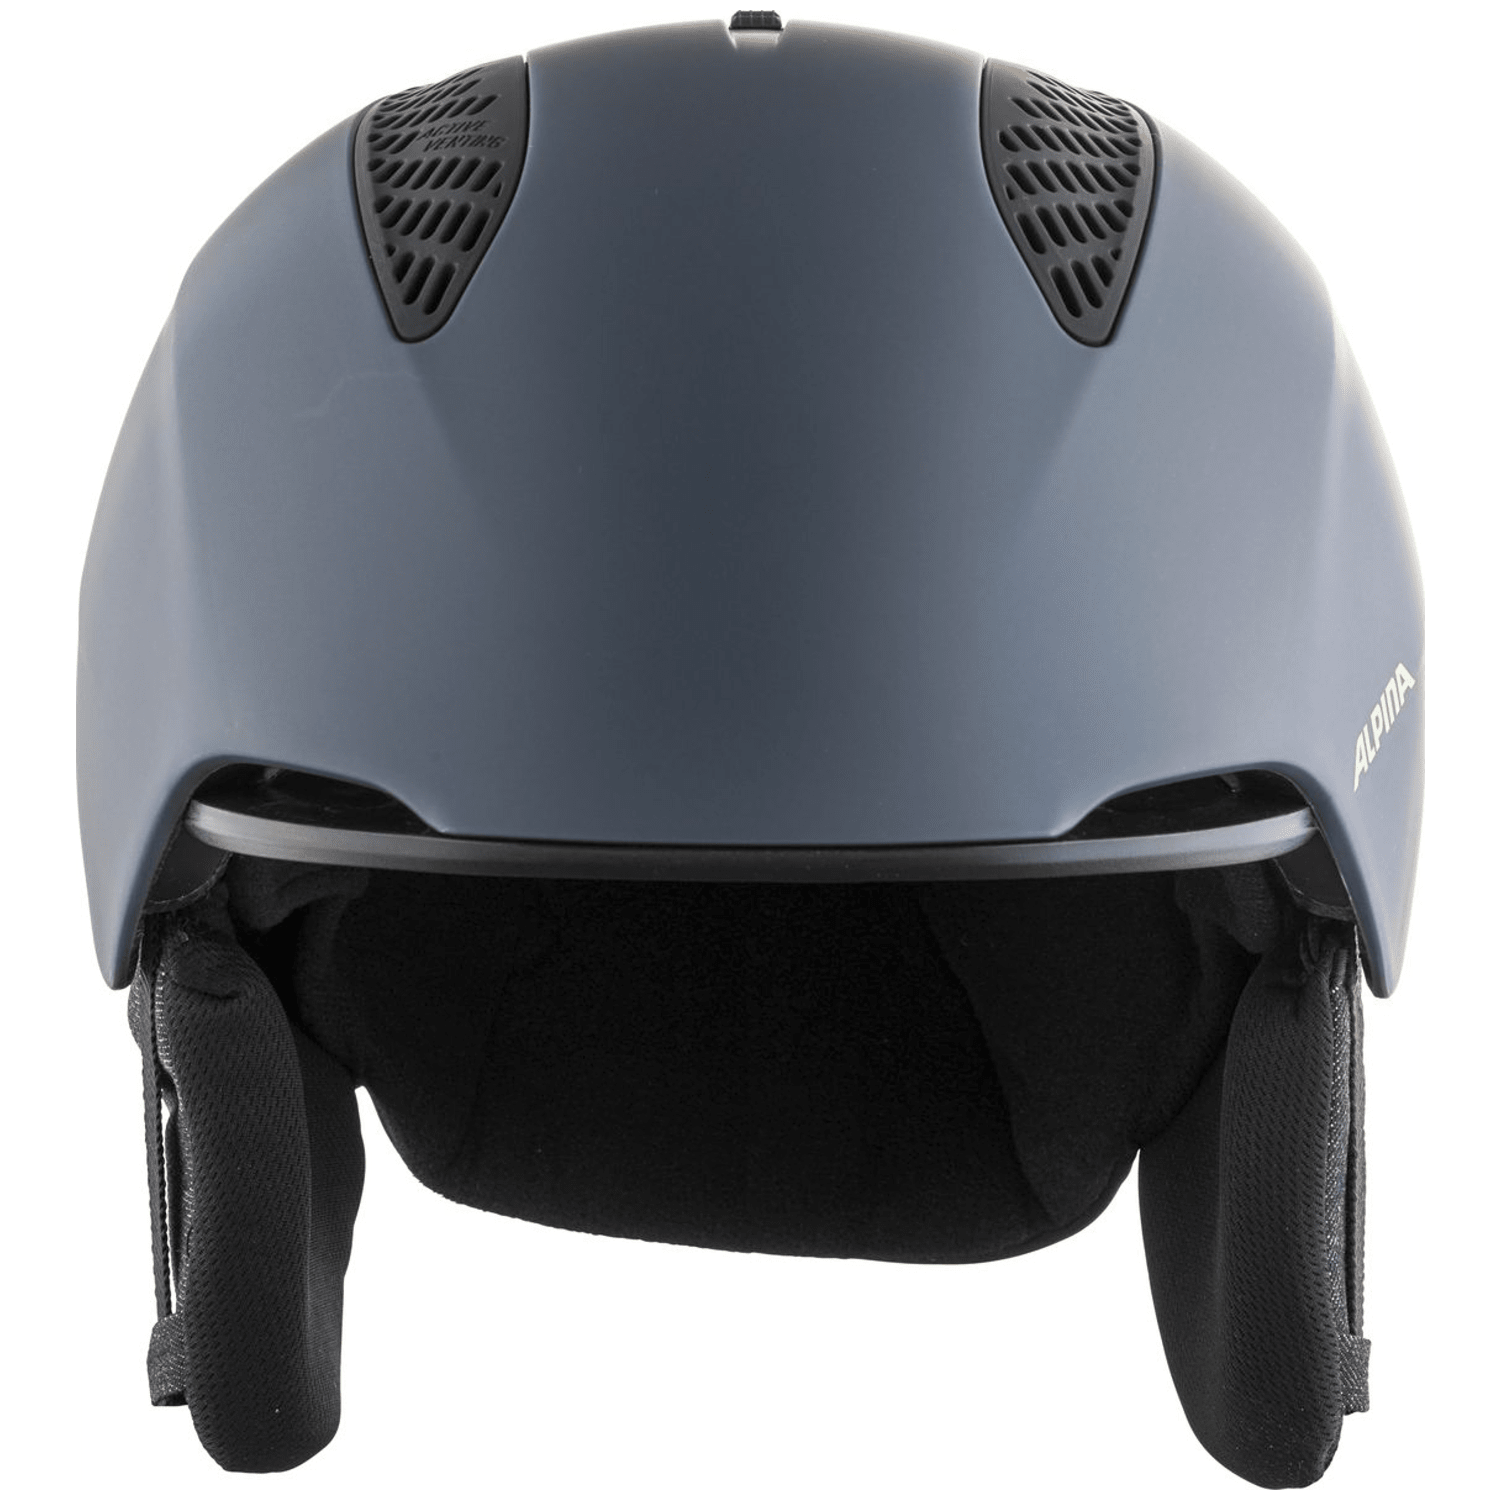 Alpina Grand Helm Unisex